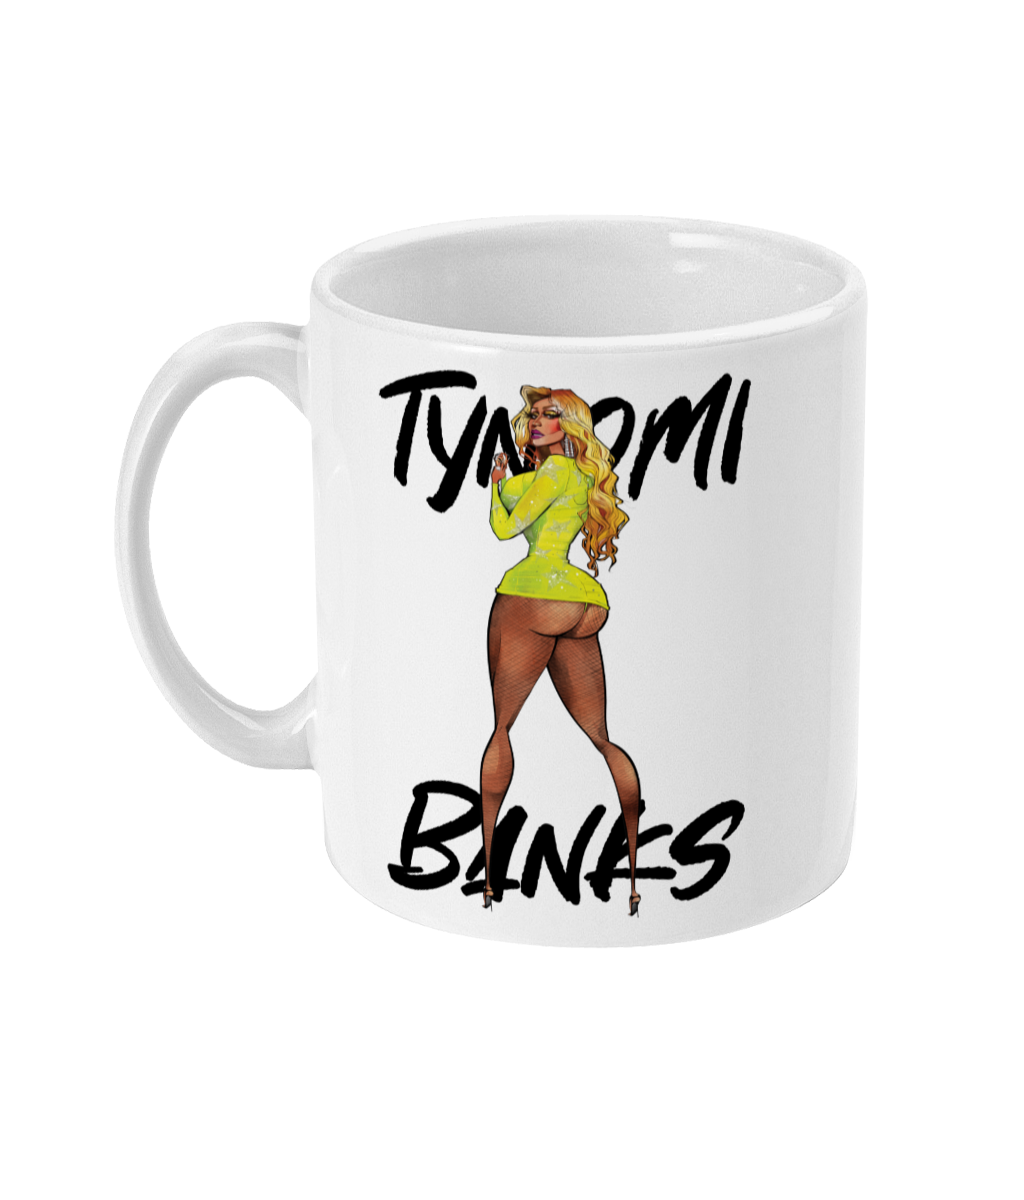 Tynomi Banks - Mug - SNATCHED MERCH